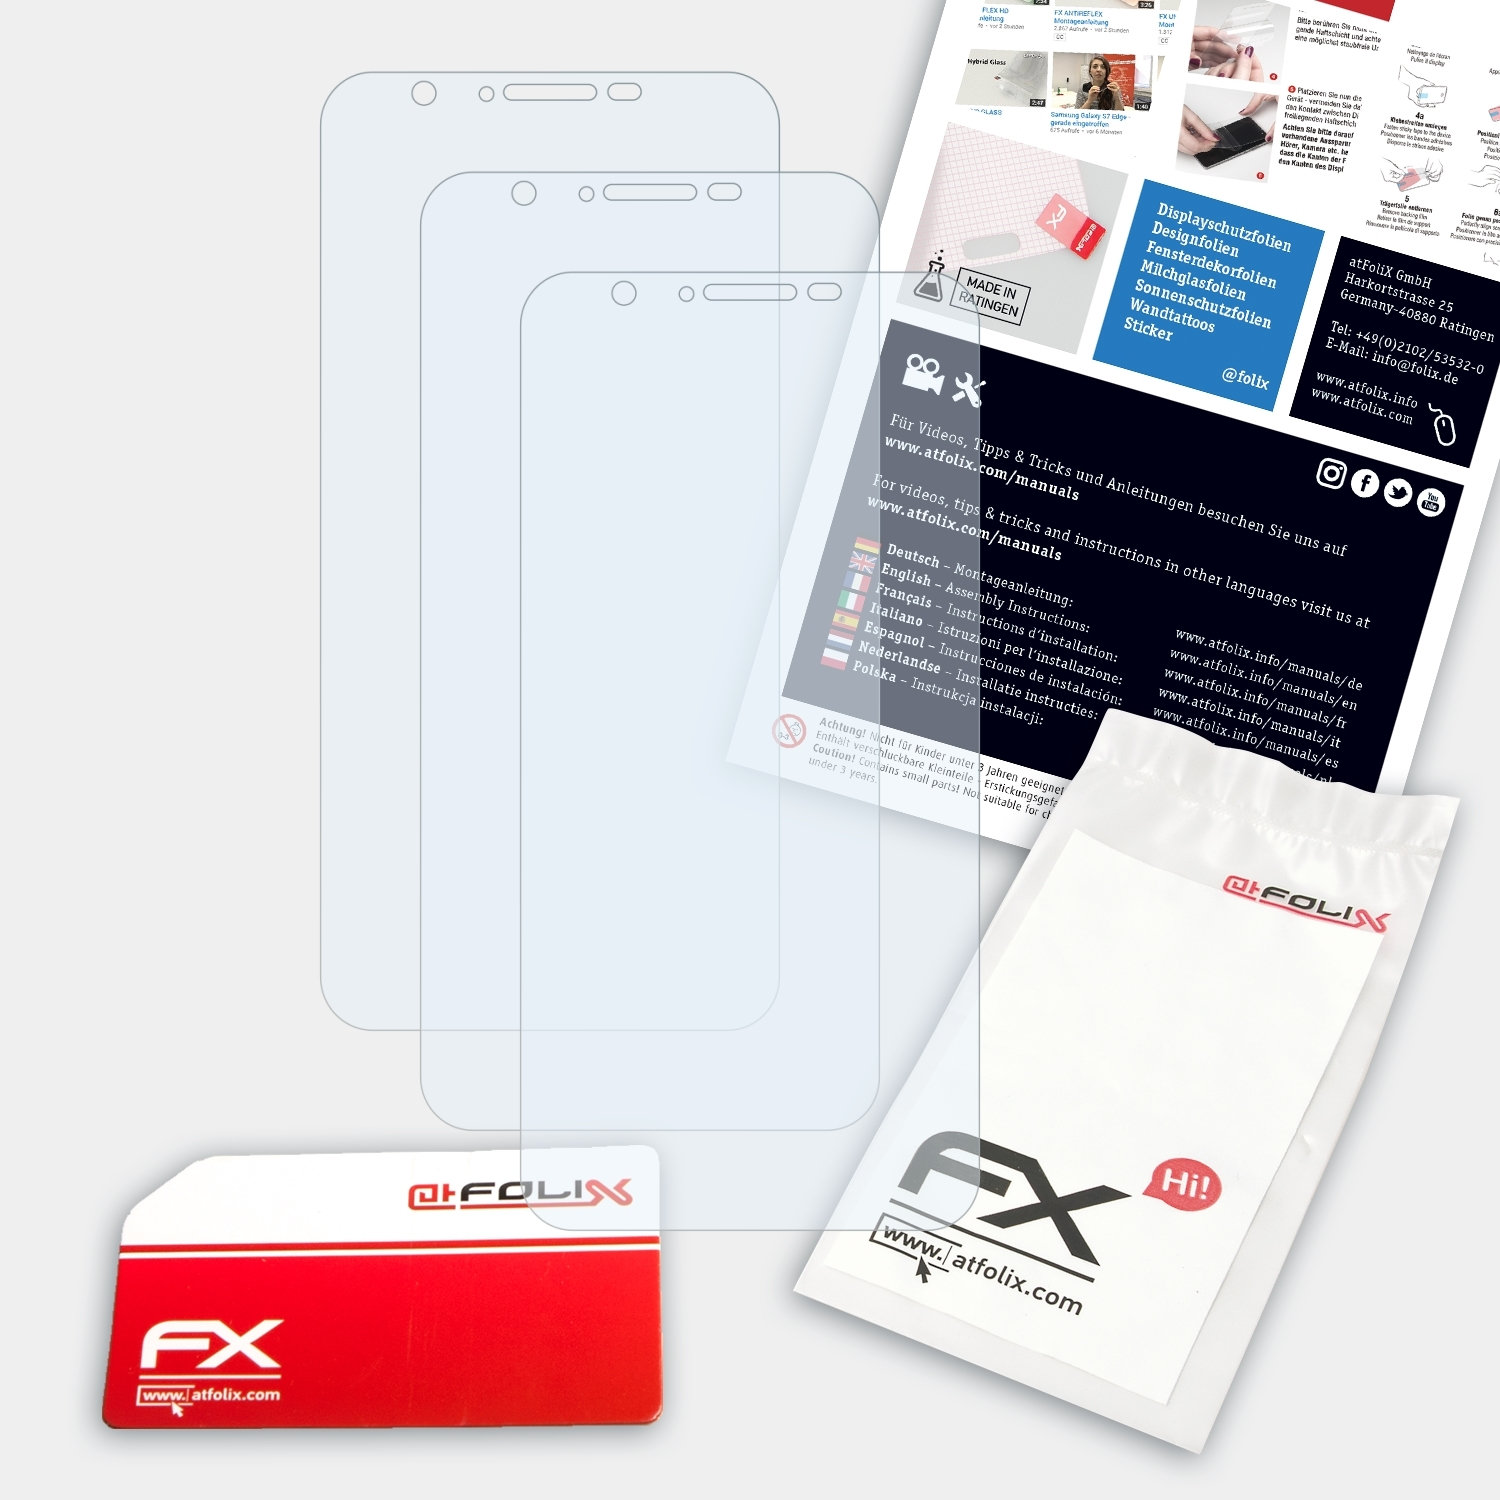 ATFOLIX FX-Clear Oukitel U16 3x Max) Displayschutz(für